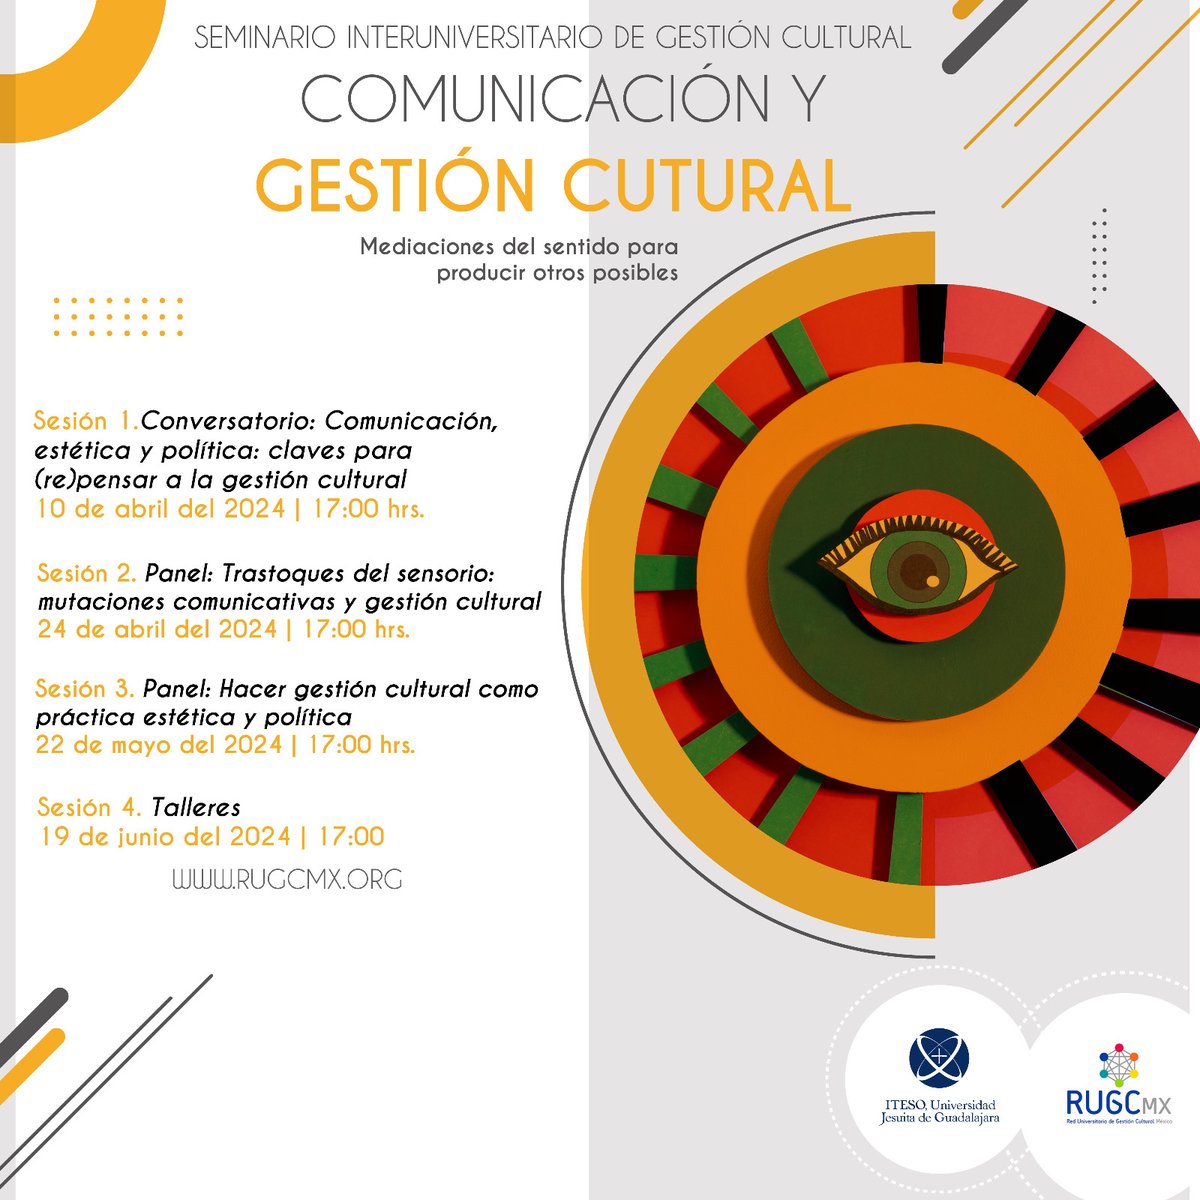 #Mañana 8 de abril de 2024, ¡último día para inscribirse!
#SeminarioInterinstucional  #GestiónCultural
Red Universitaria de Gestión Cultural México #RUGCMx
@rugc_mx
@iteso